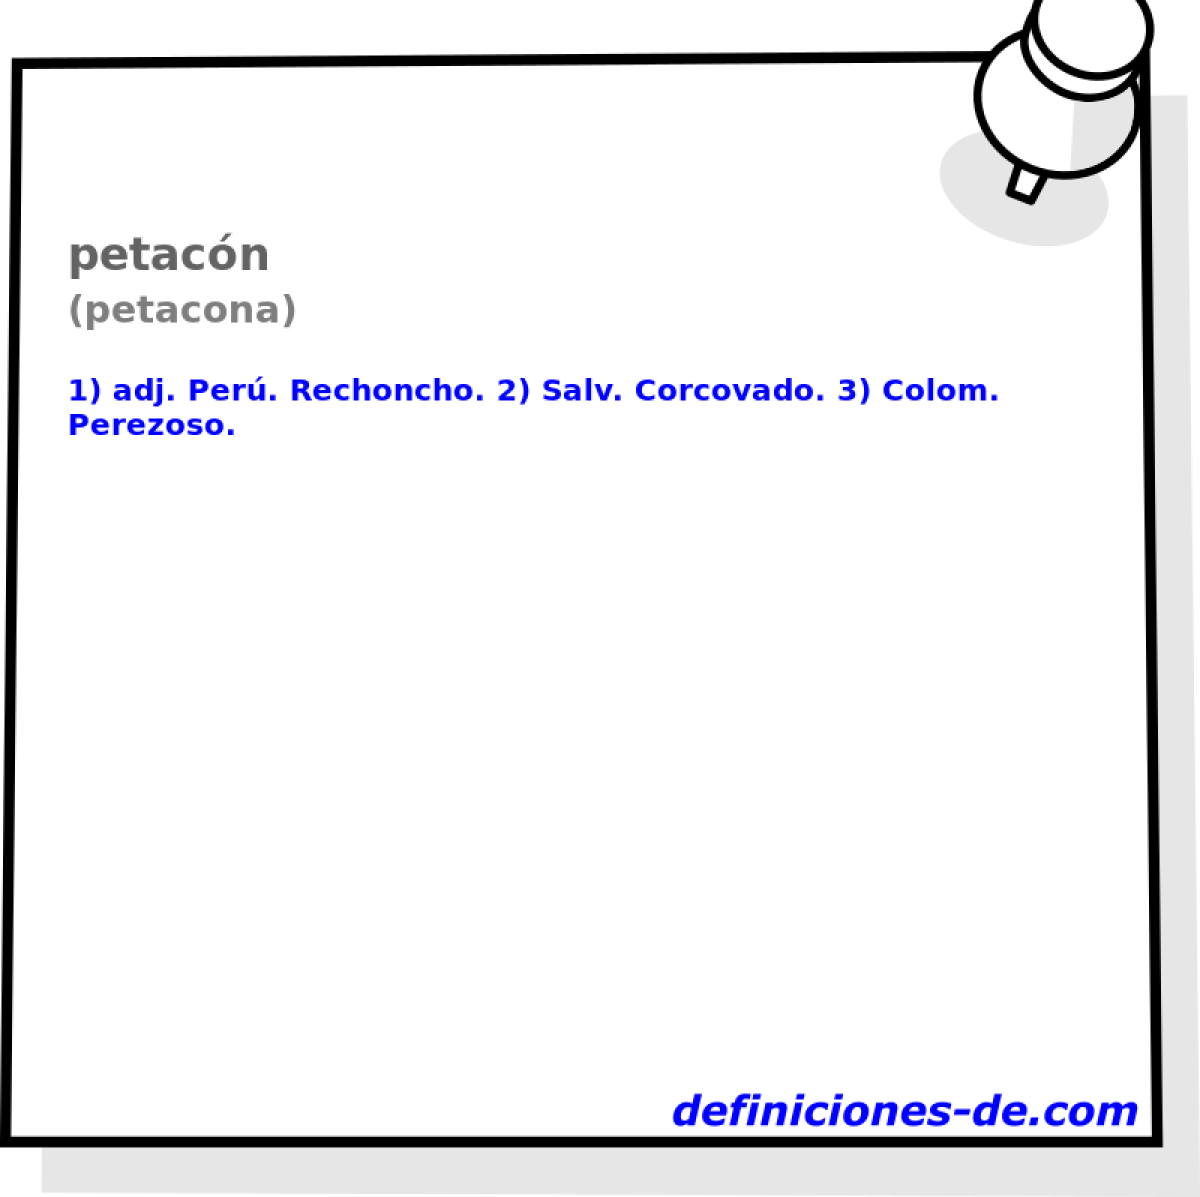 petacn (petacona)